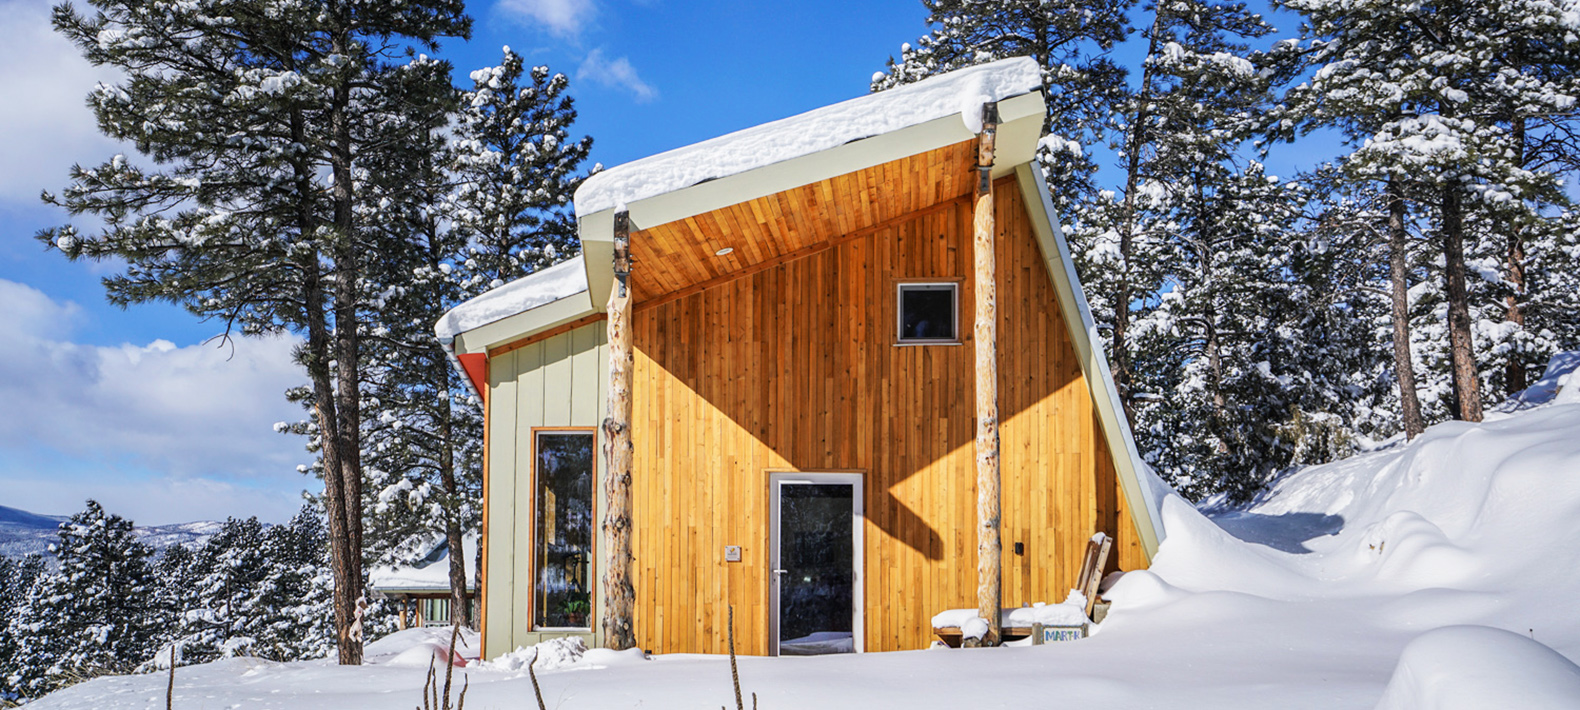 Designer Builds Efficient Off-Grid Passive House In Colorado...